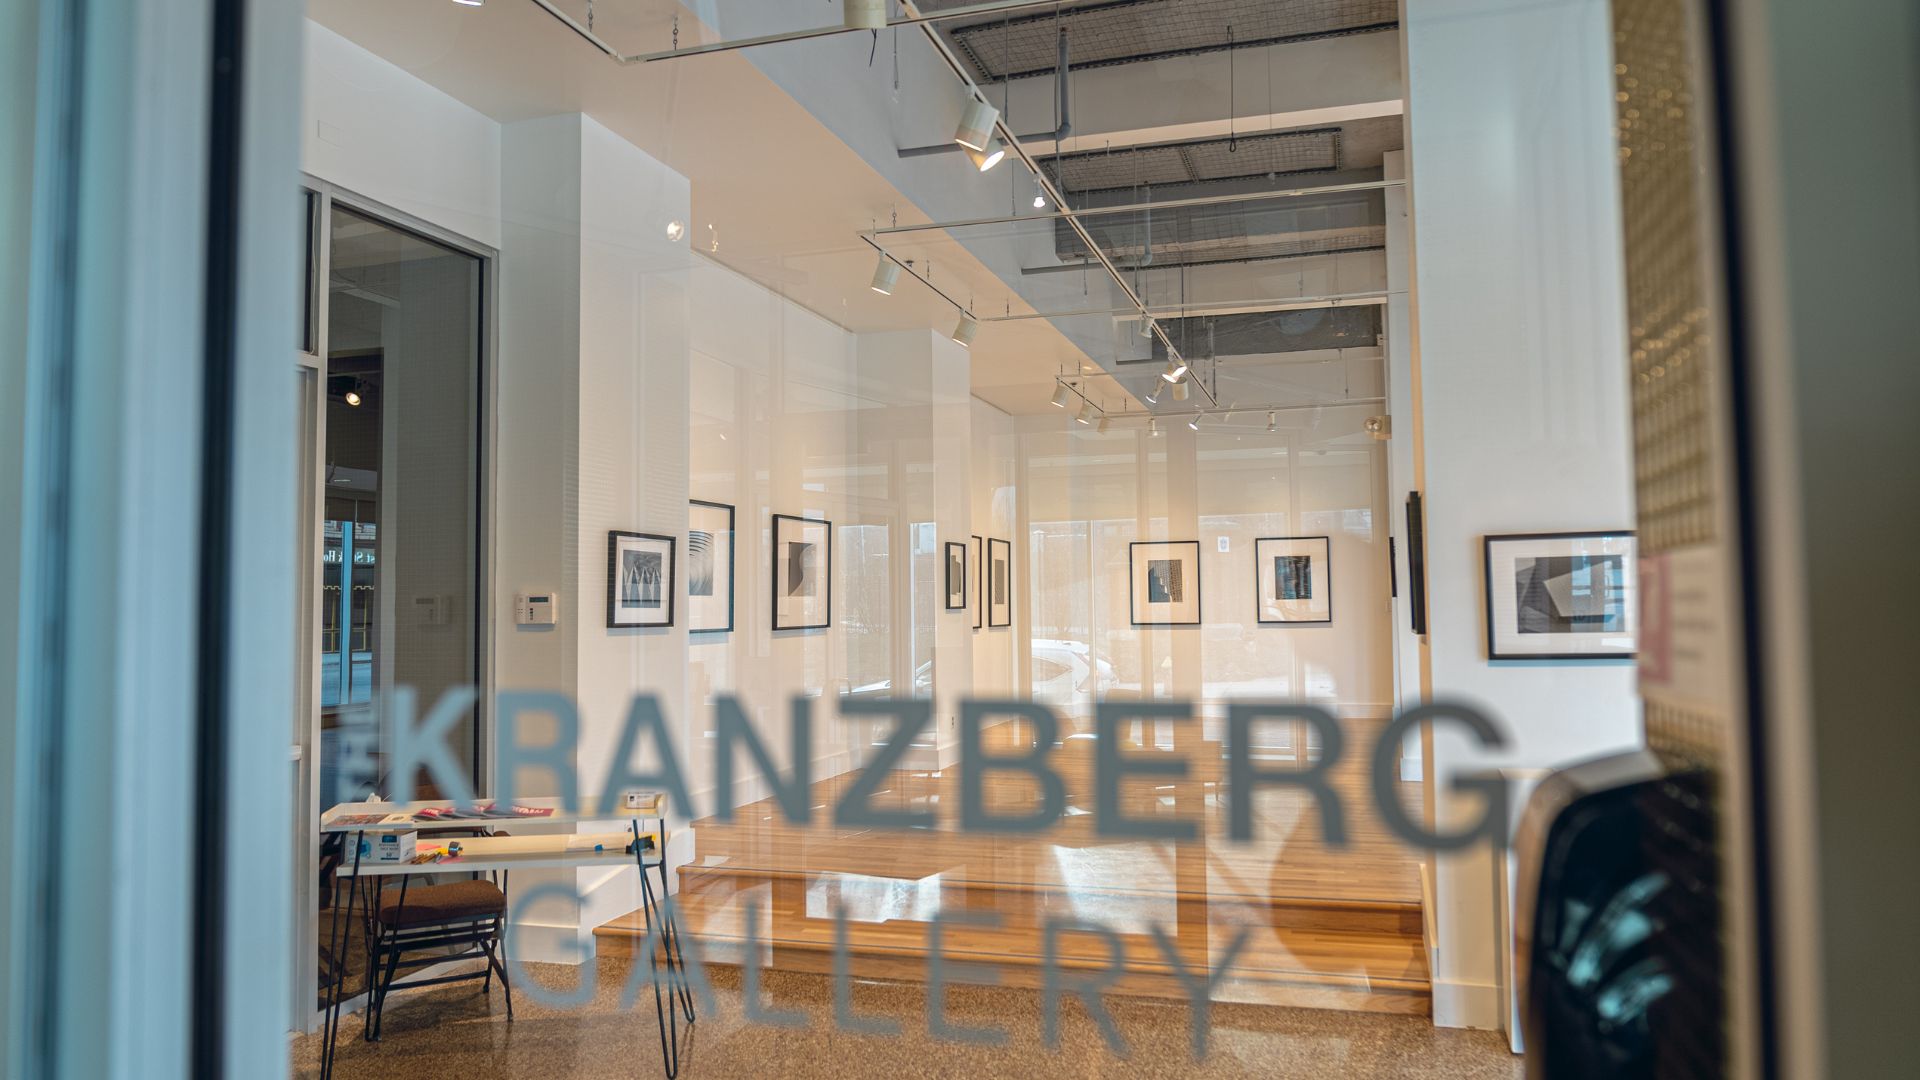 The Kranzberg boasts an art gallery in the Grand Center neighborhood of St. Louis.